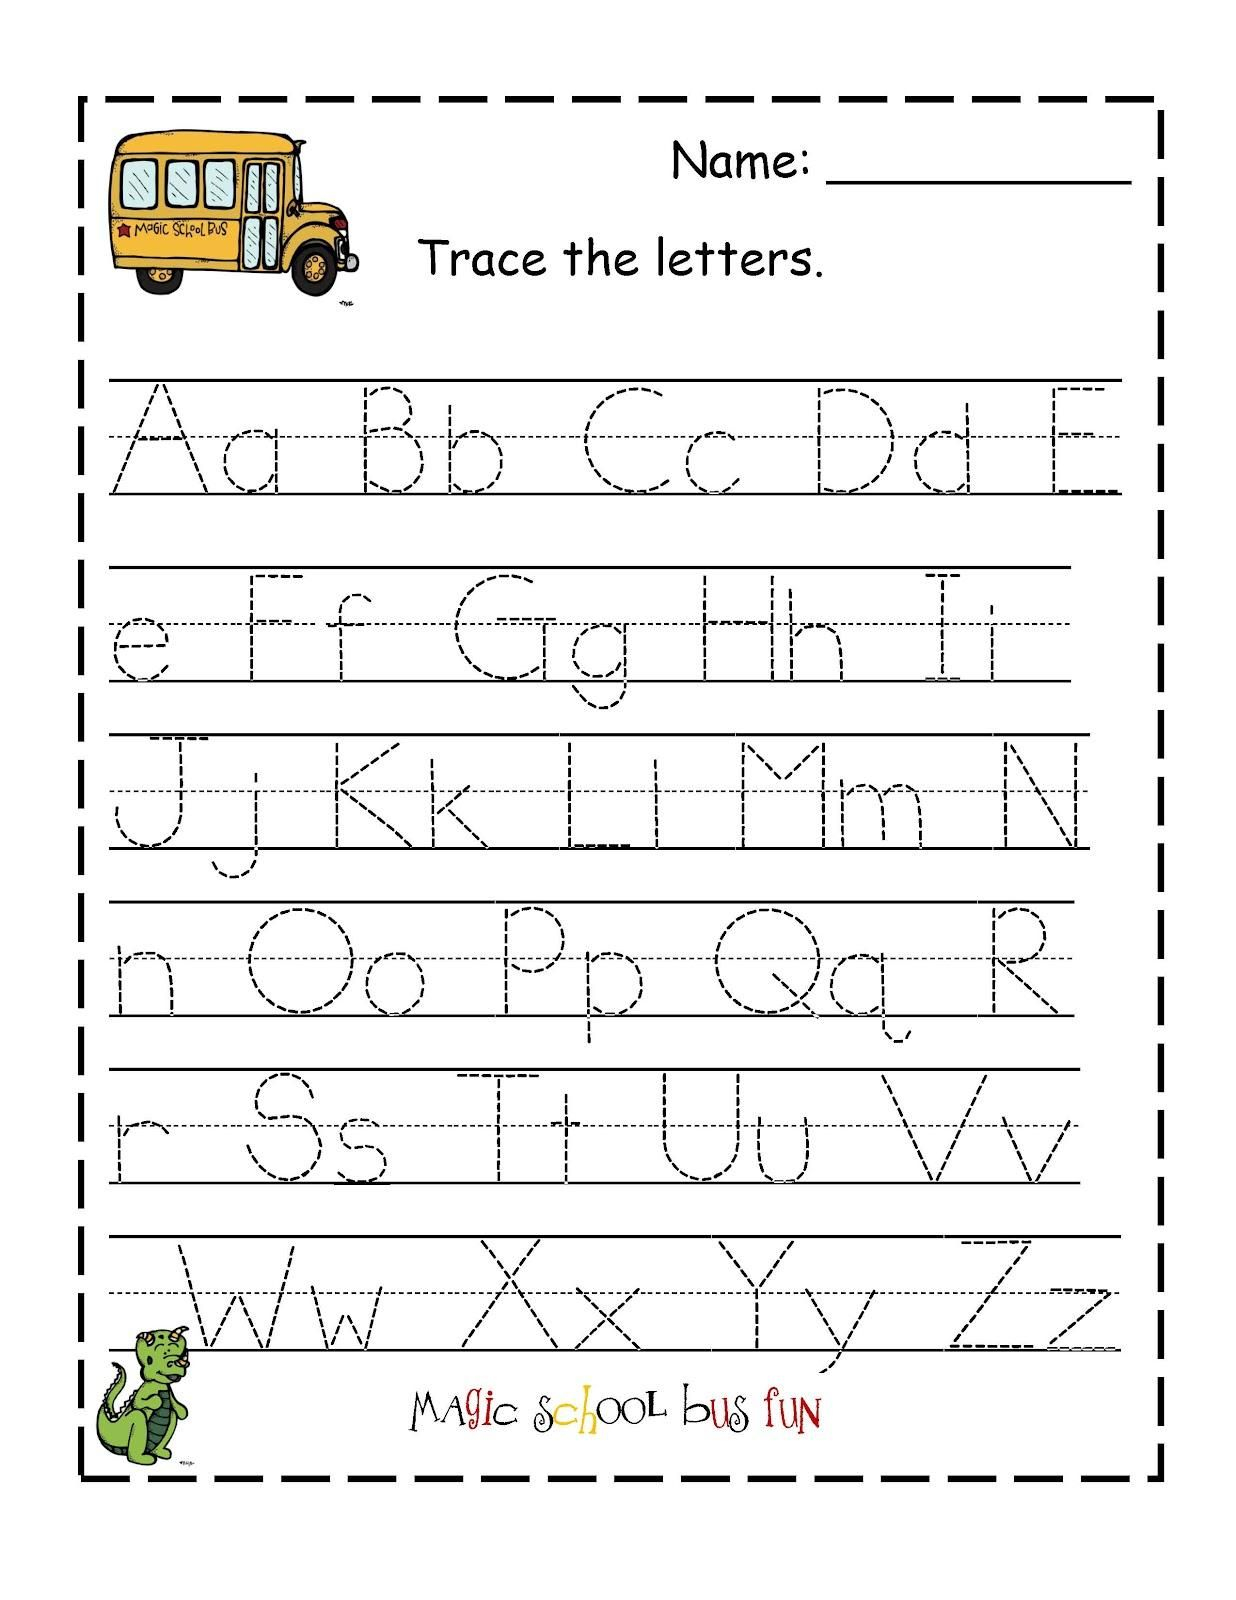 Free Printable Abc Tracing Worksheets #2 | Handwriting regarding Alphabet Tracing Sheet